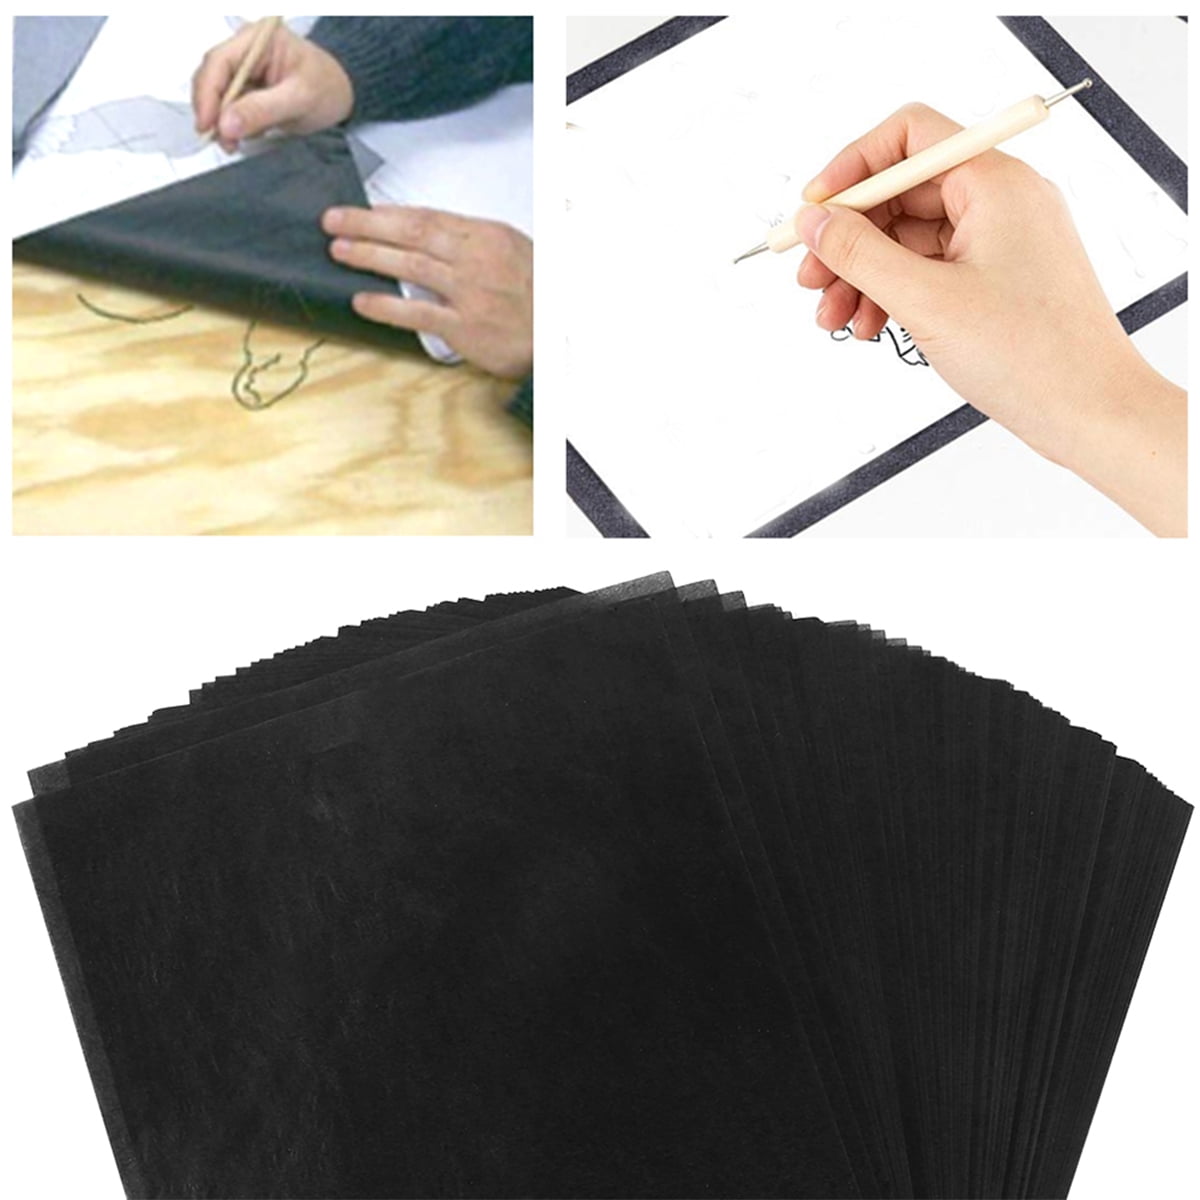 50pcs A4 Carbon Paper Black Legible Graphite Transfer Tracing